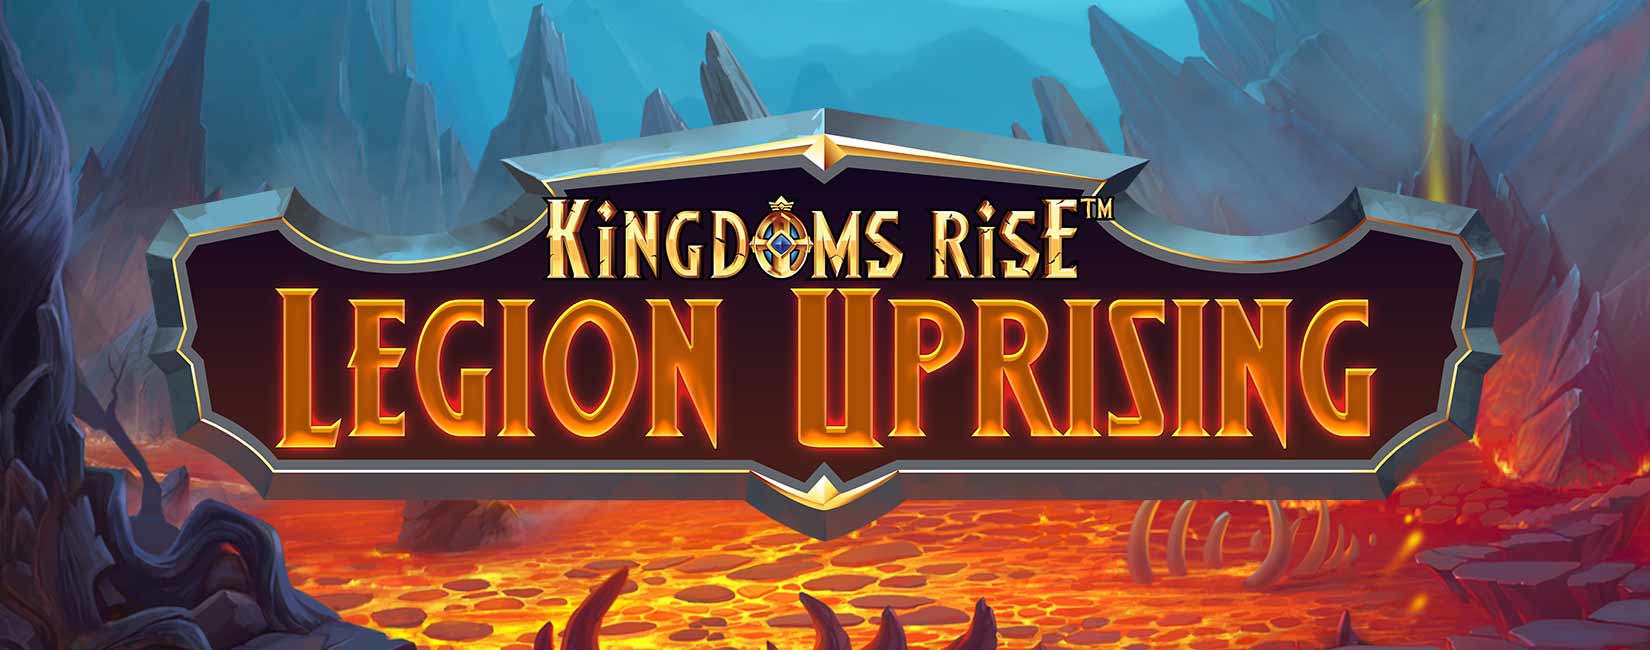 CRE-286259-January Reviews-Kingdom Rise Legion Uprising-GB-static-pp-1650x650_